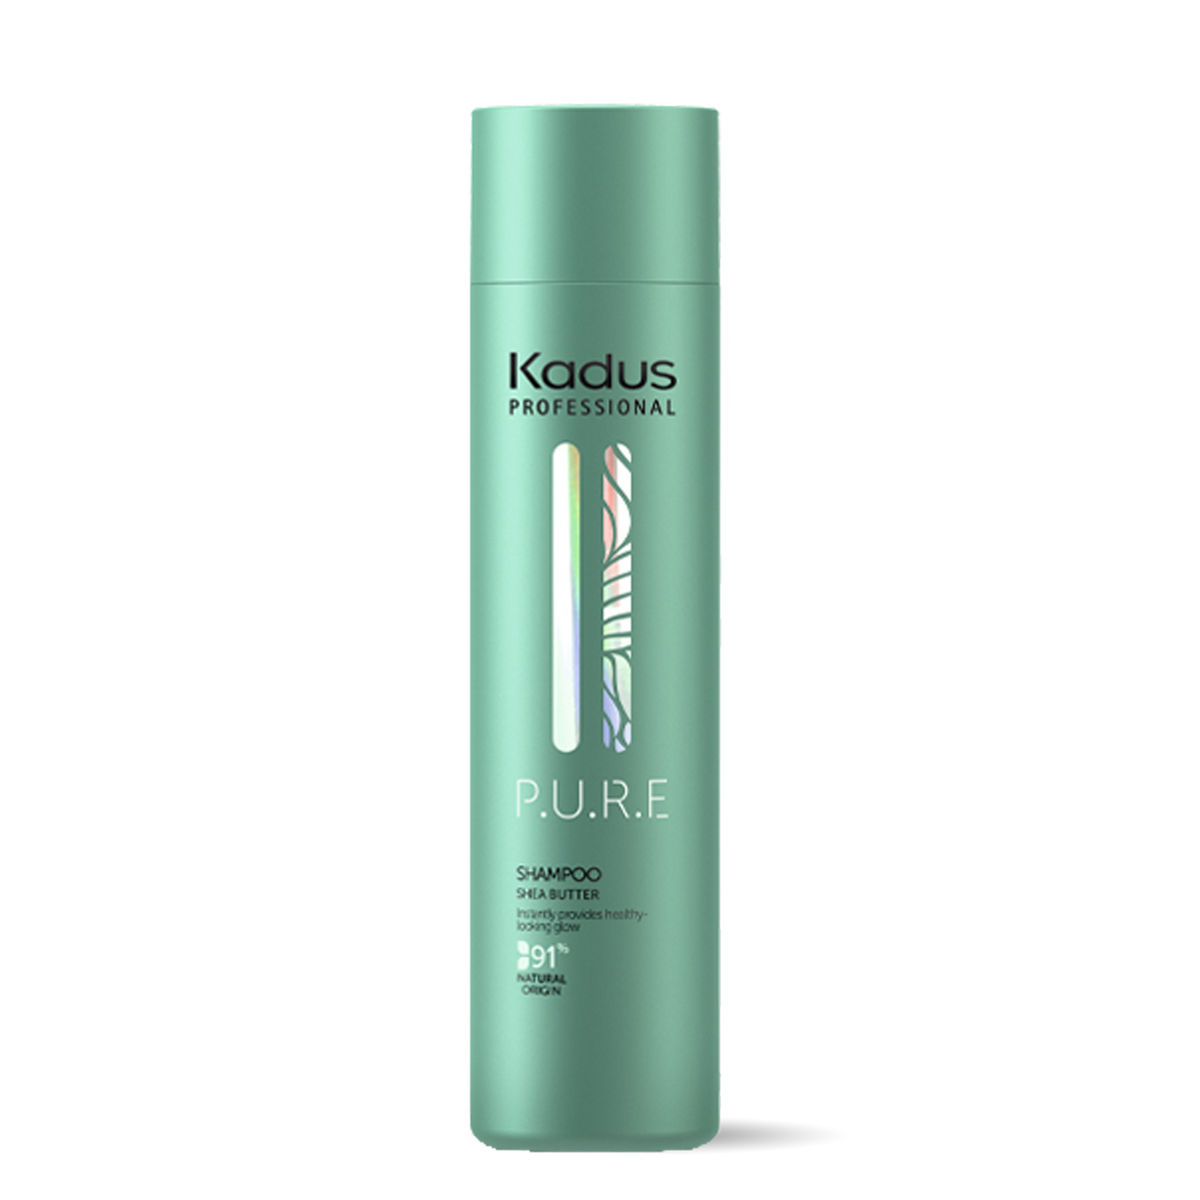 Kadus P.U.R.E Shampoo 250ml - by Kadus Professionals |ProCare Outlet|